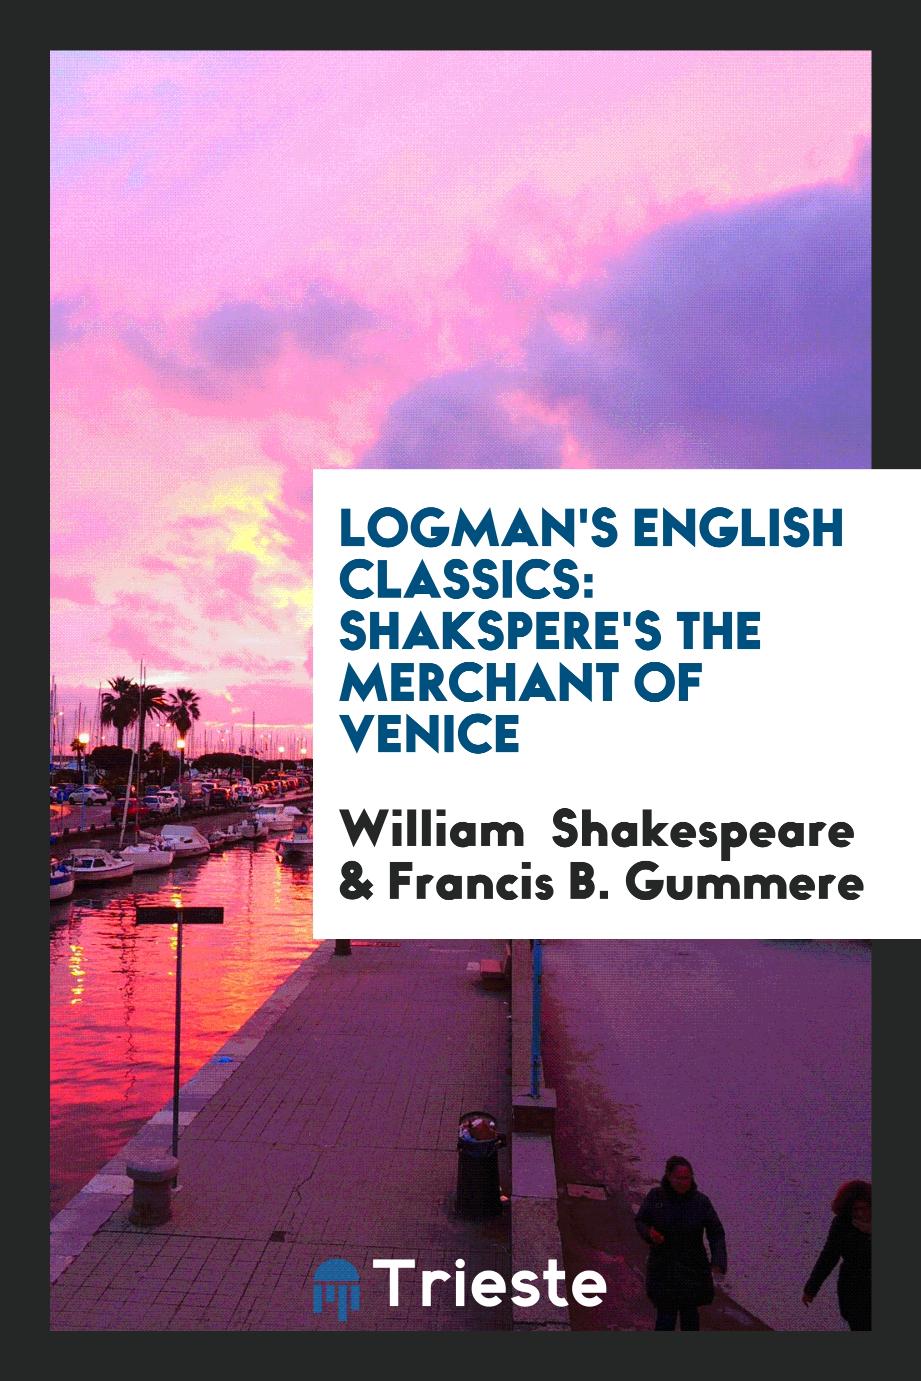 Logman's English Classics: Shakspere's The Merchant of Venice